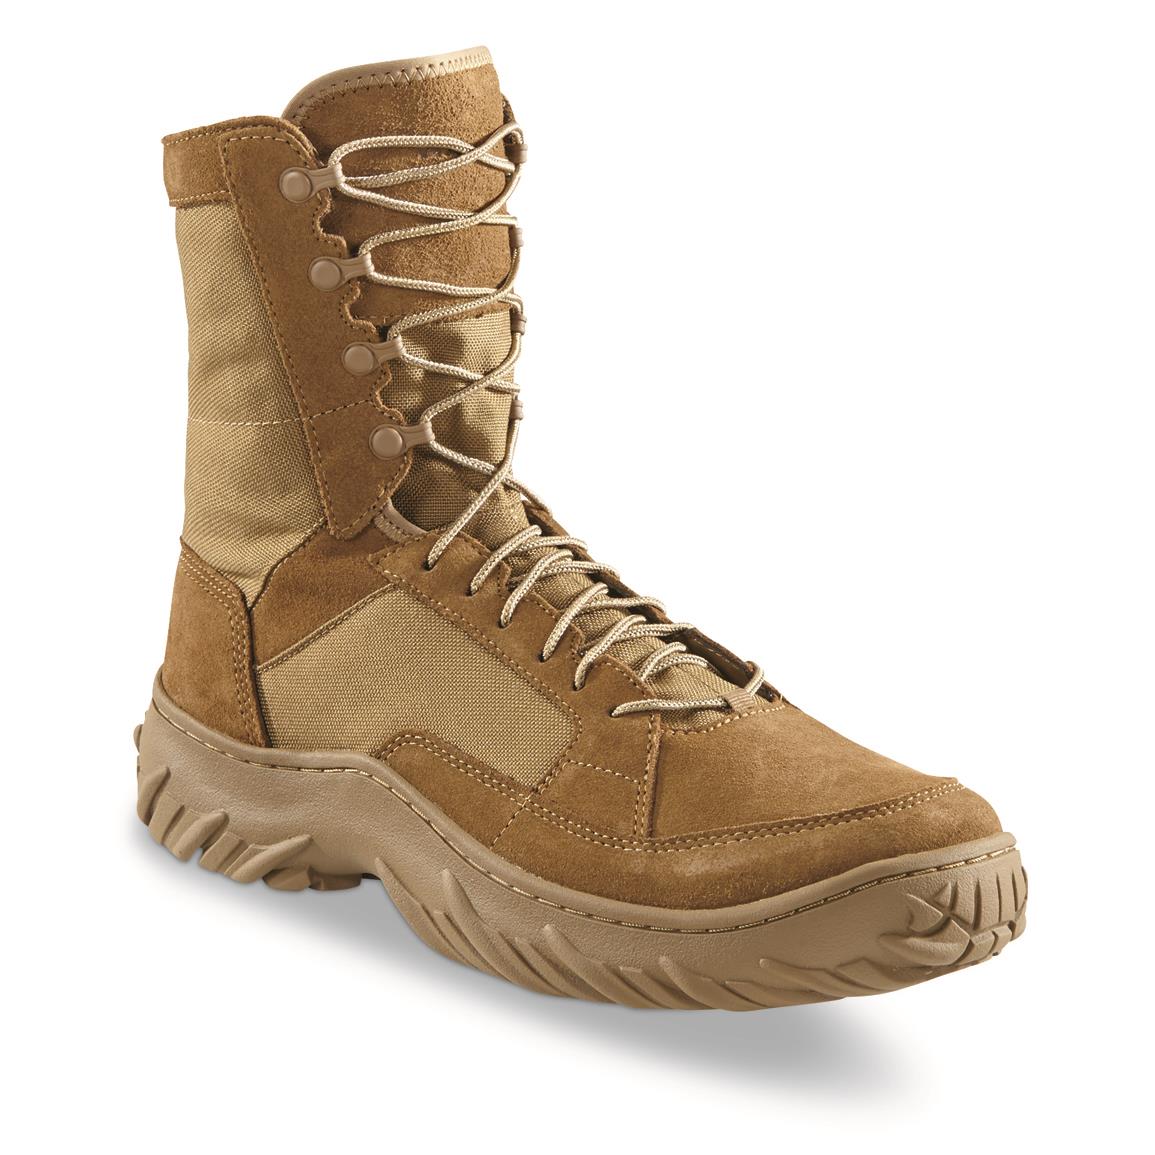 Oakley Men's Field Assault 8" Tactical Boots, Coyote